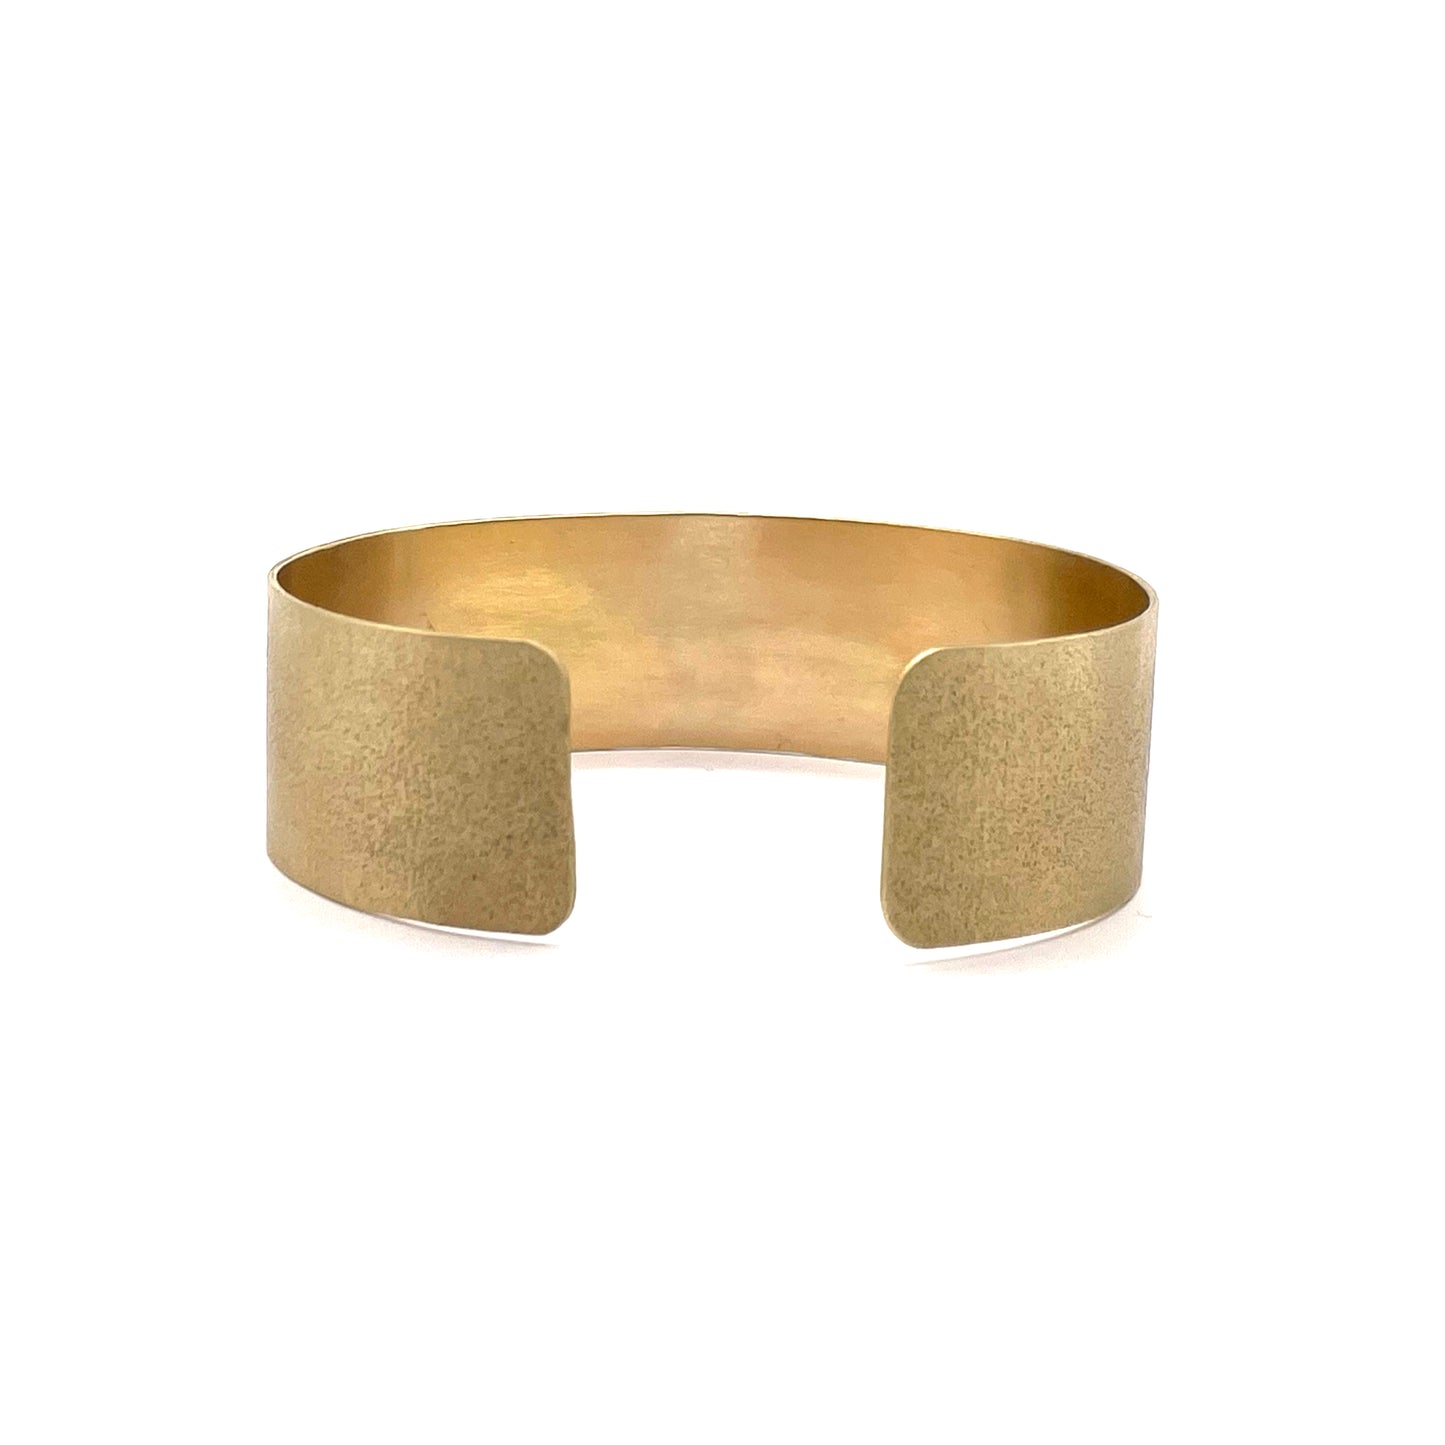 Irit Designs 10K Gold and Diamonds 'Love' Cuff